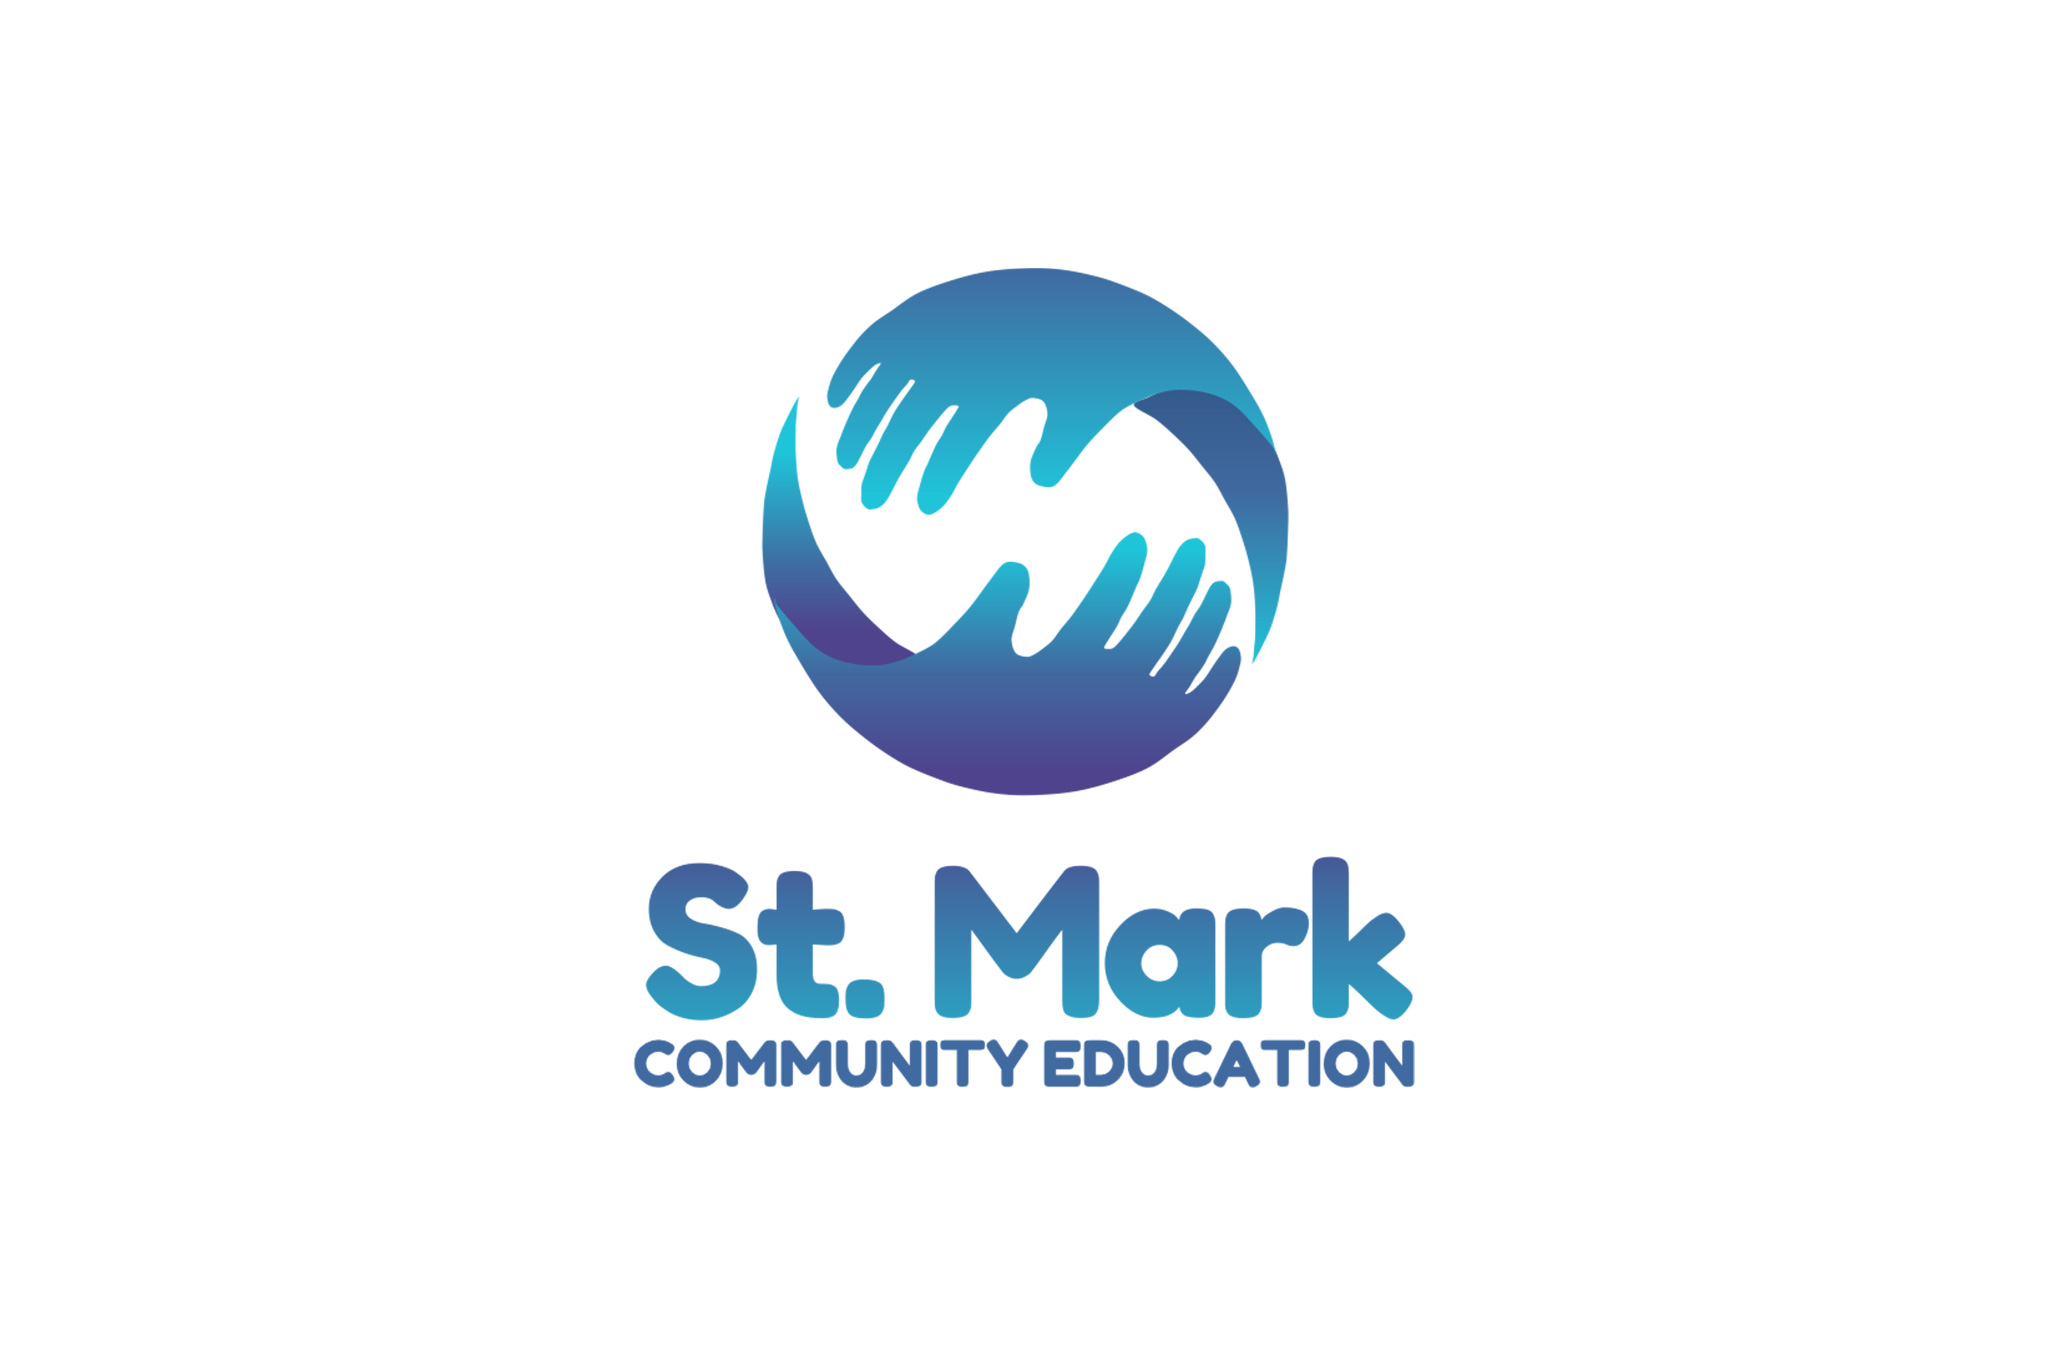 St. Marks Community Education Program logo